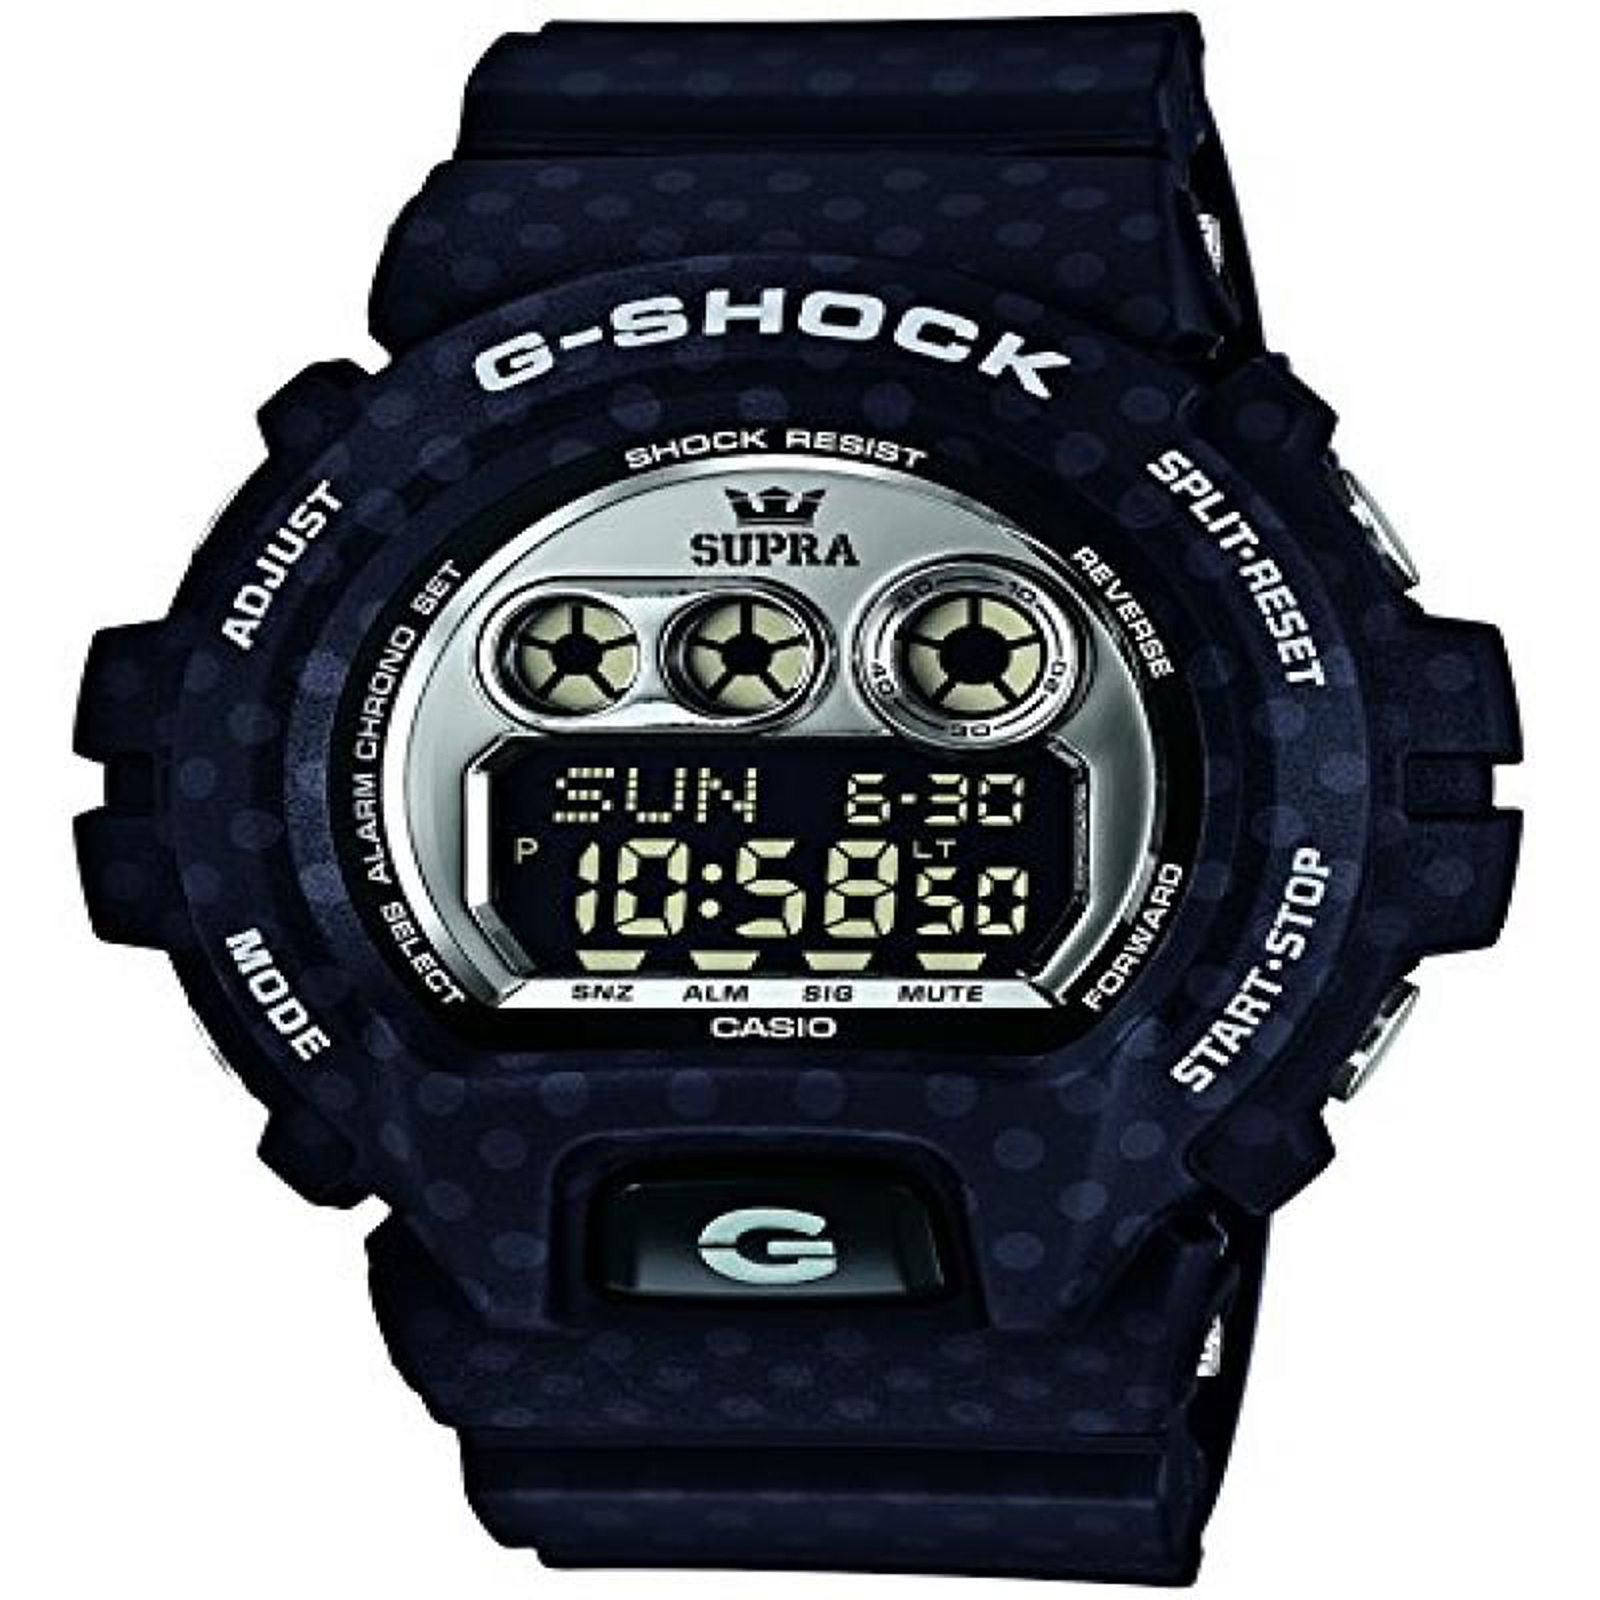 Casio Men’s G-Sock Supra Resin Digital Watch - Black